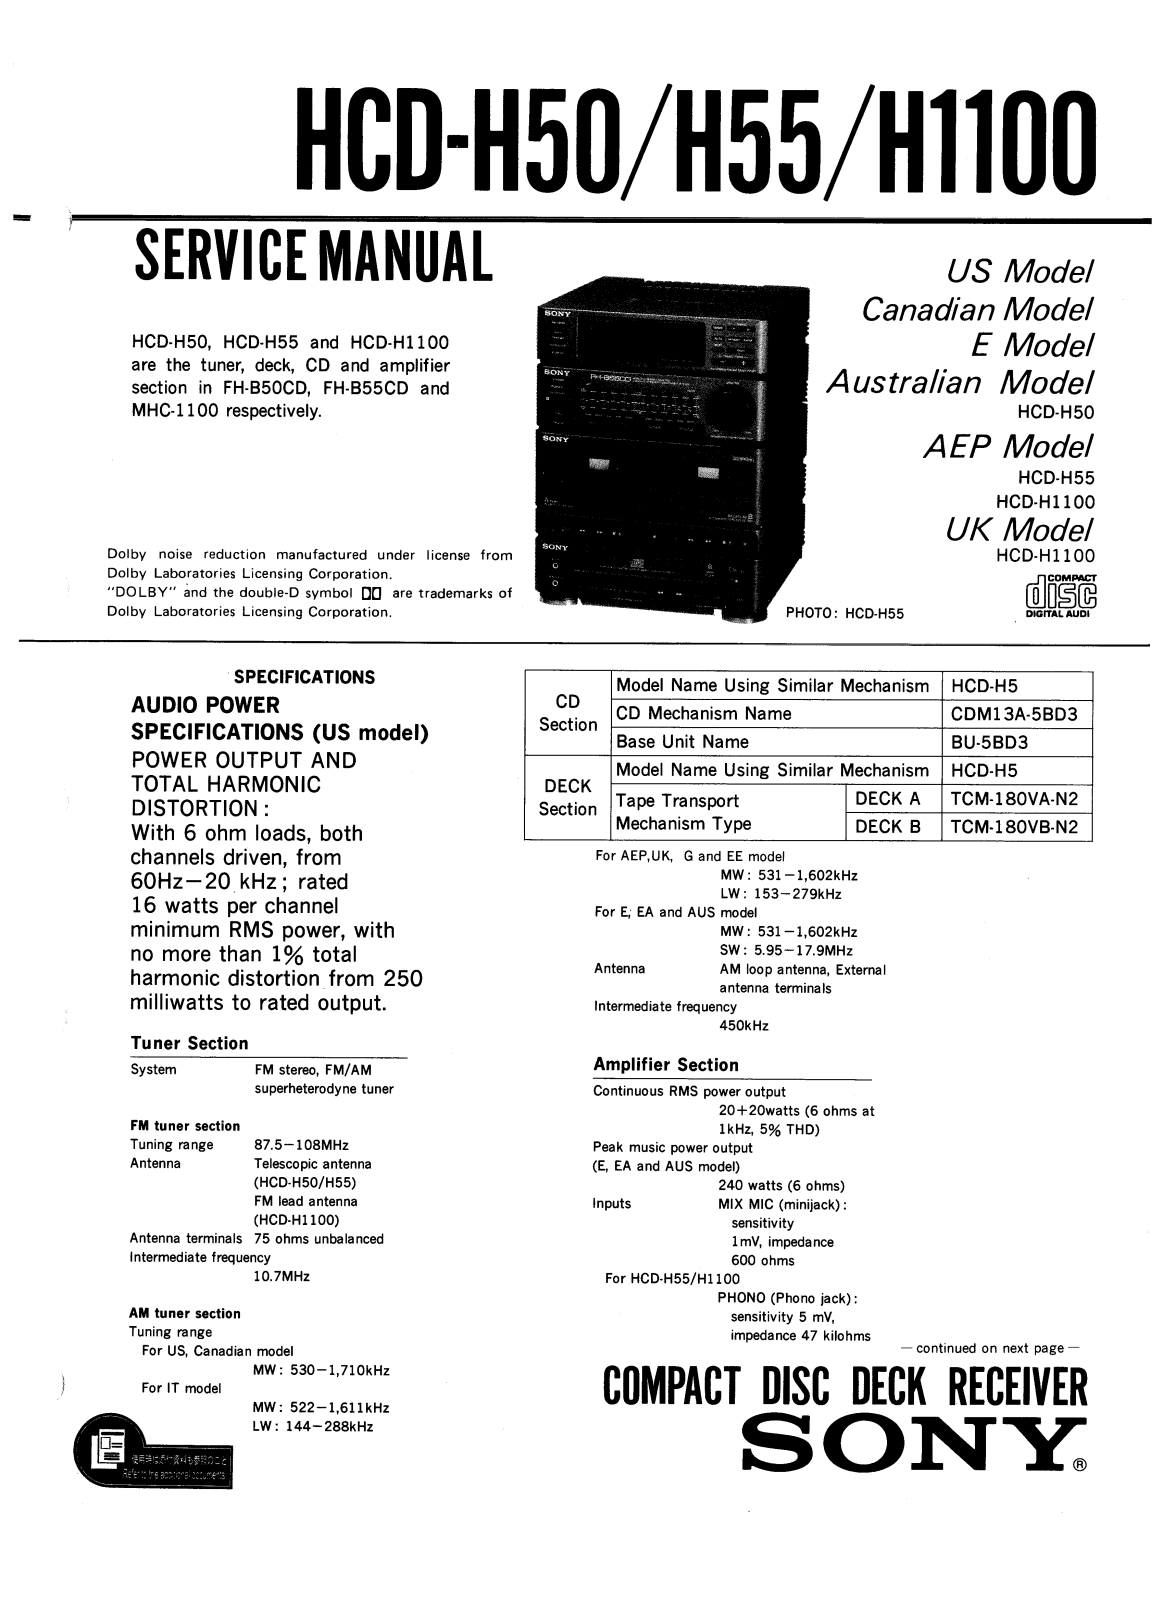 Sony HCD-H55, HCD-H1100, HCD-H50 User Manual